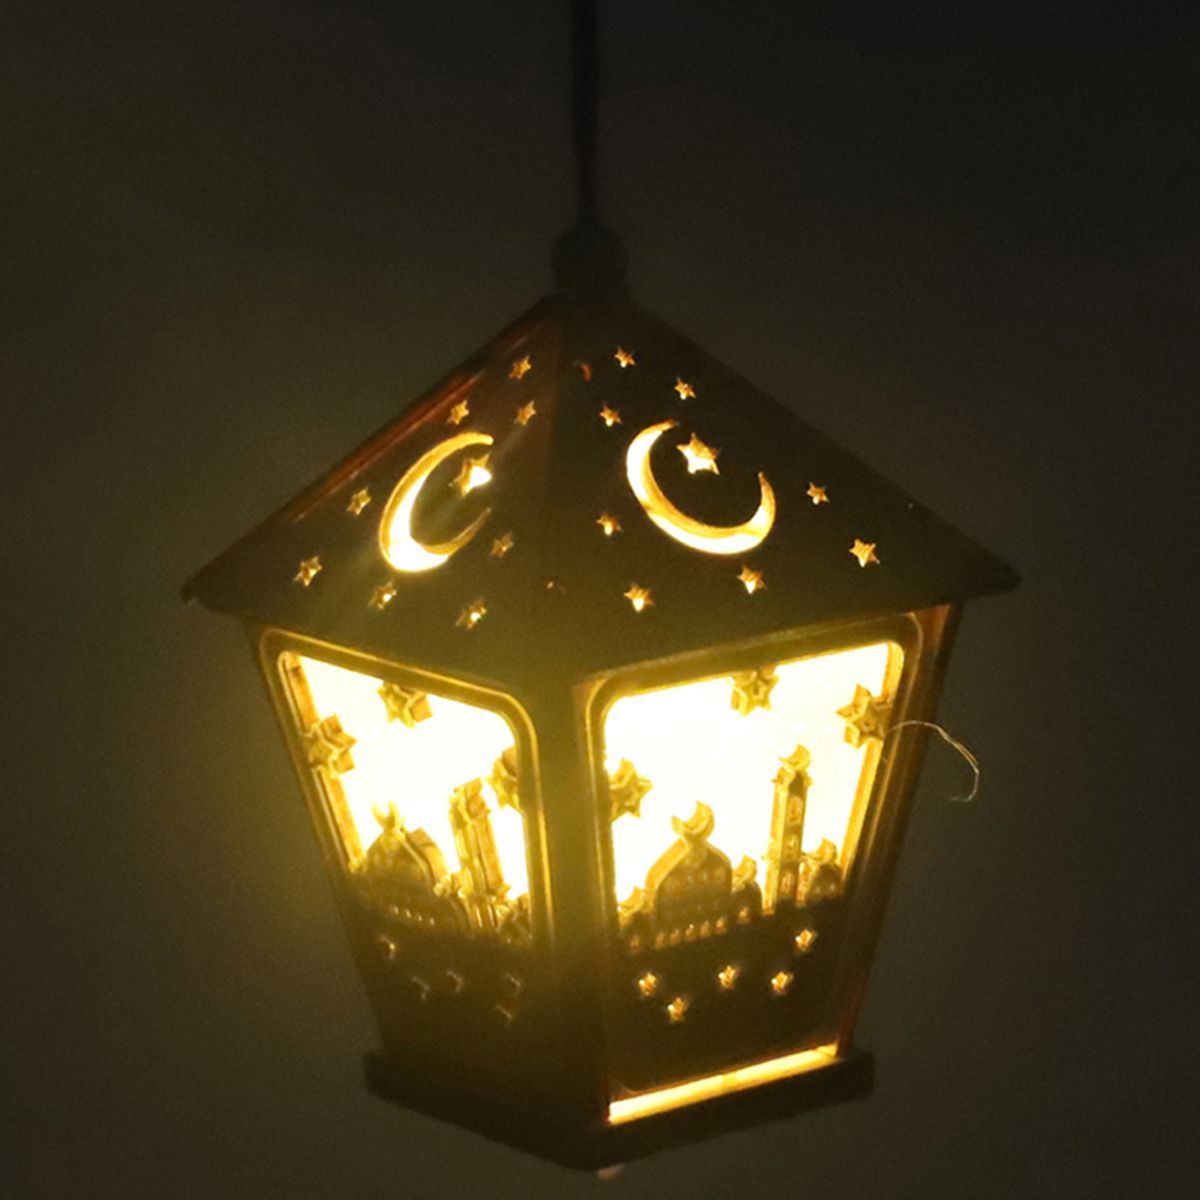 LED-DIY-House-Wooden-Lamp-Festival-Decorative-Night-Light-Eid-Mubarak-Ramadan-1660402